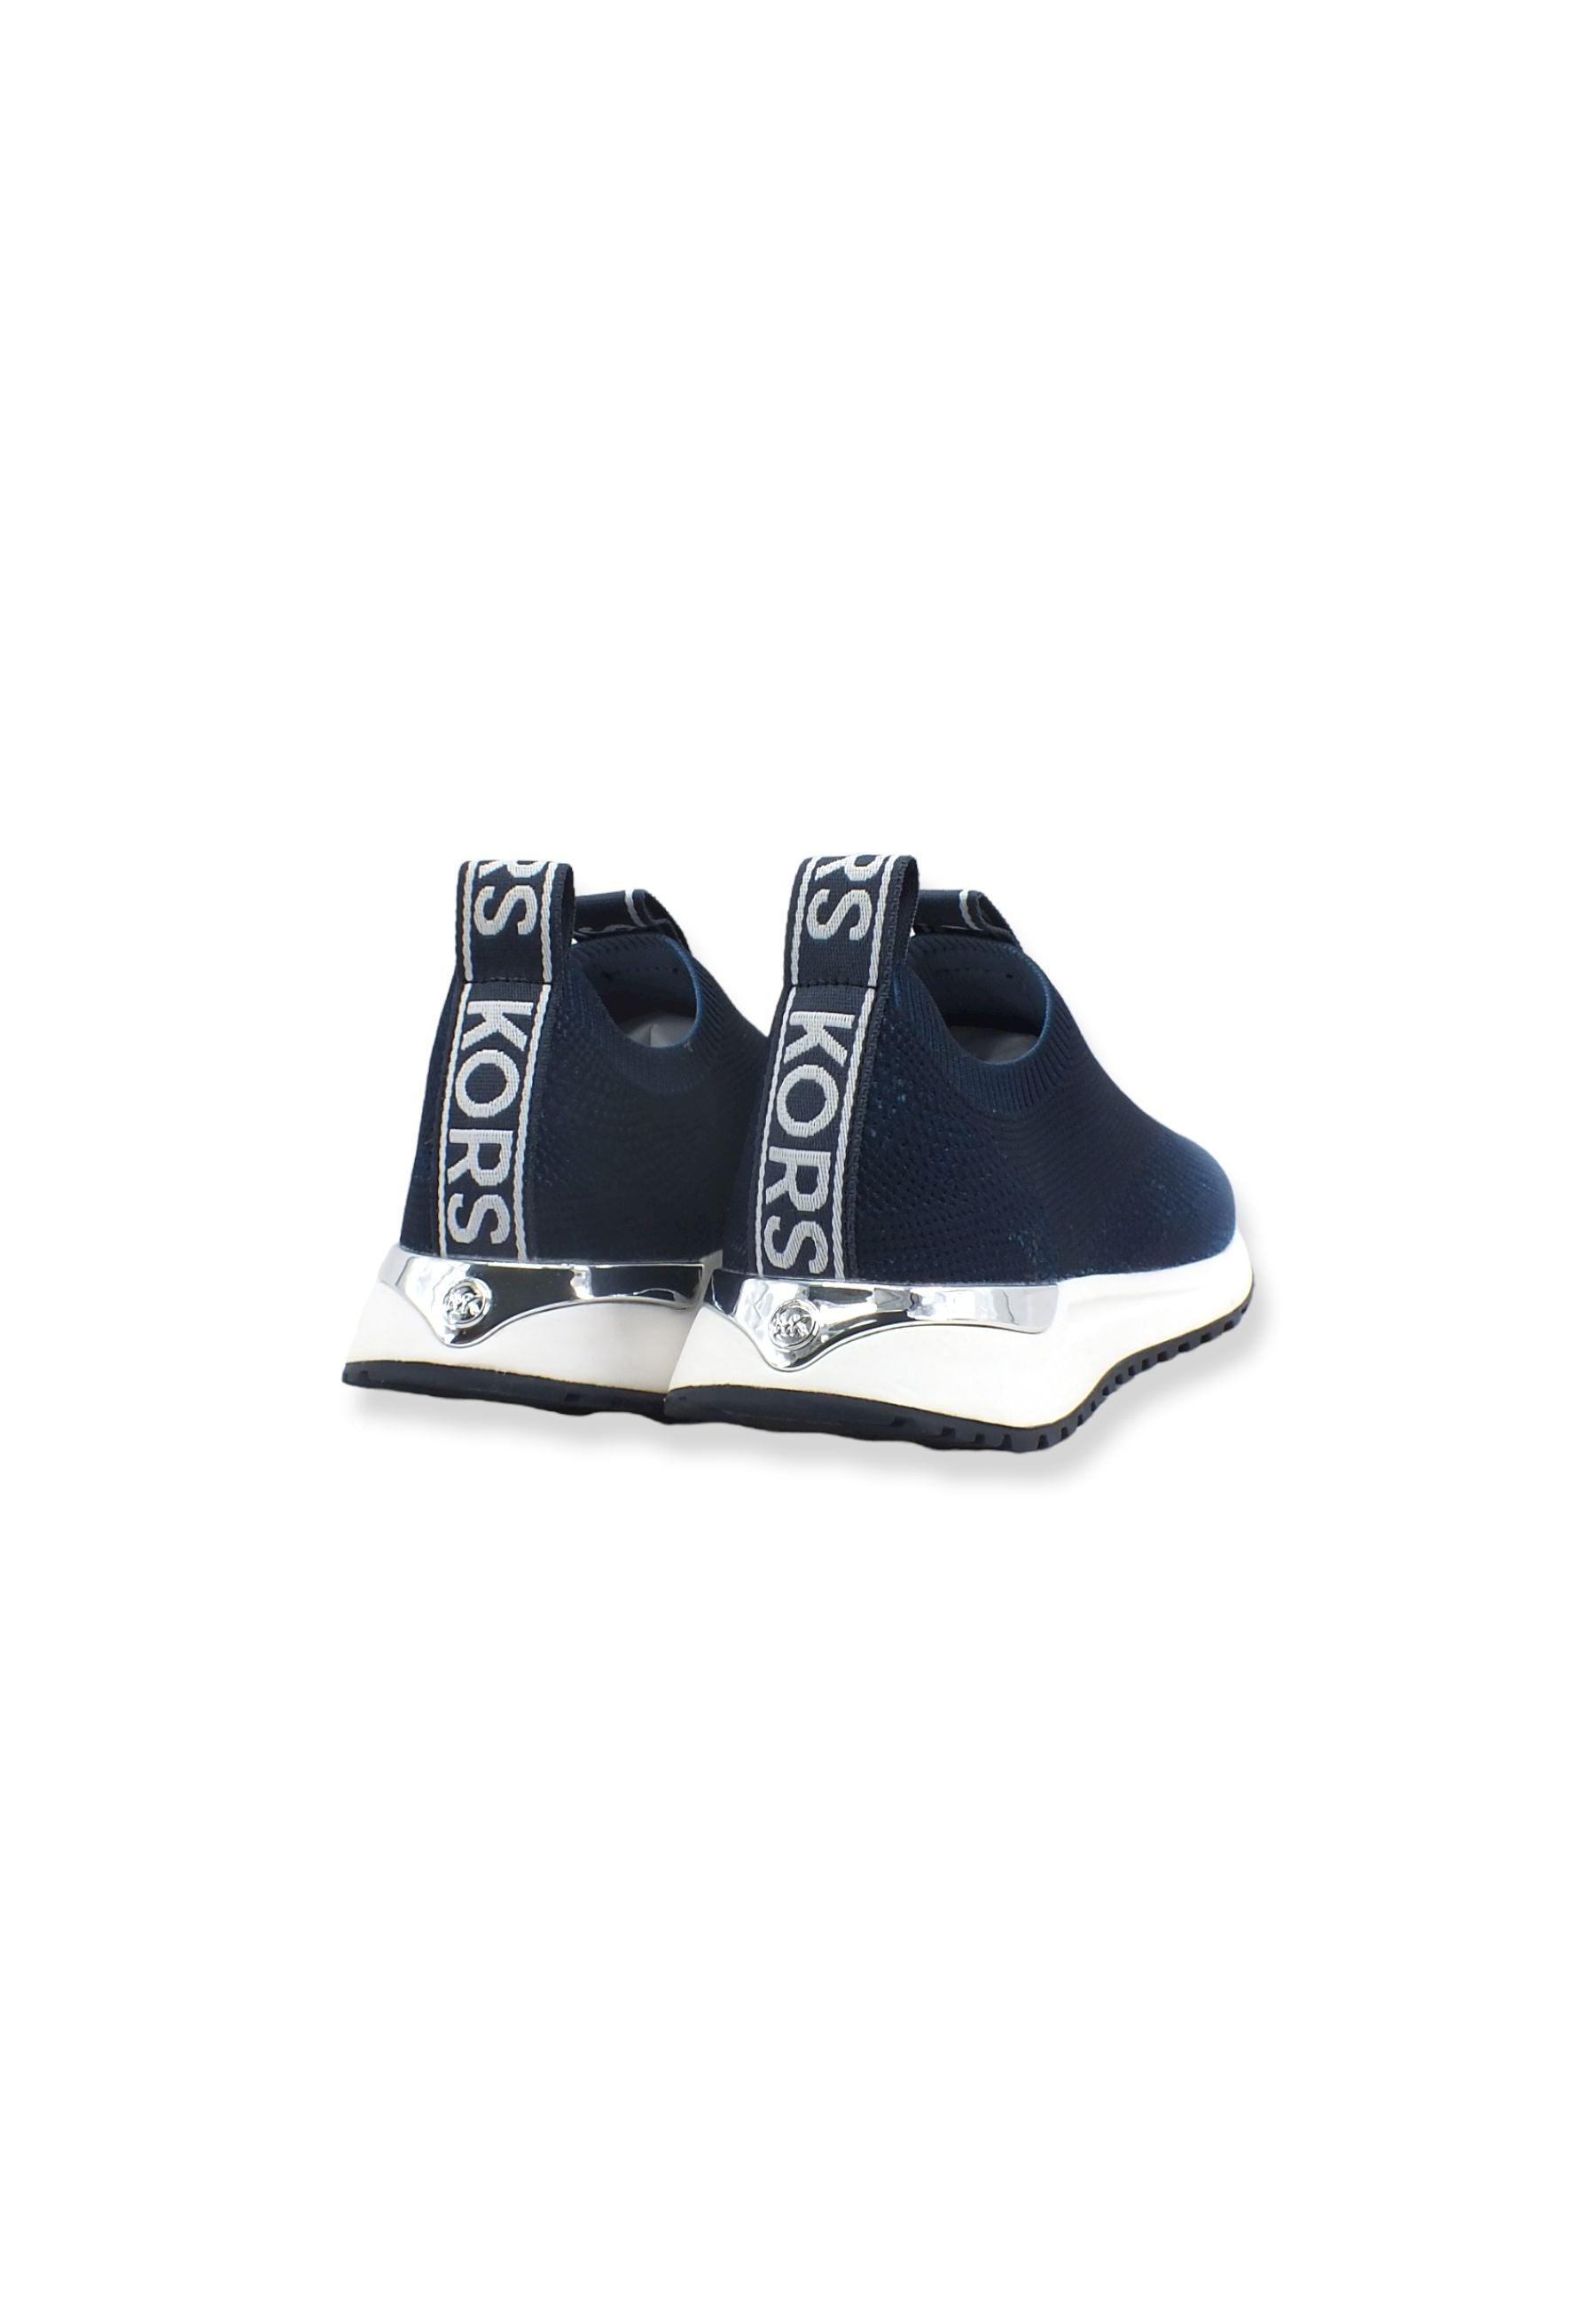 MICHAEL KORS Bodie Sneaker Slip On Gradient Navy 43T2BDFS1D - Sandrini Calzature e Abbigliamento